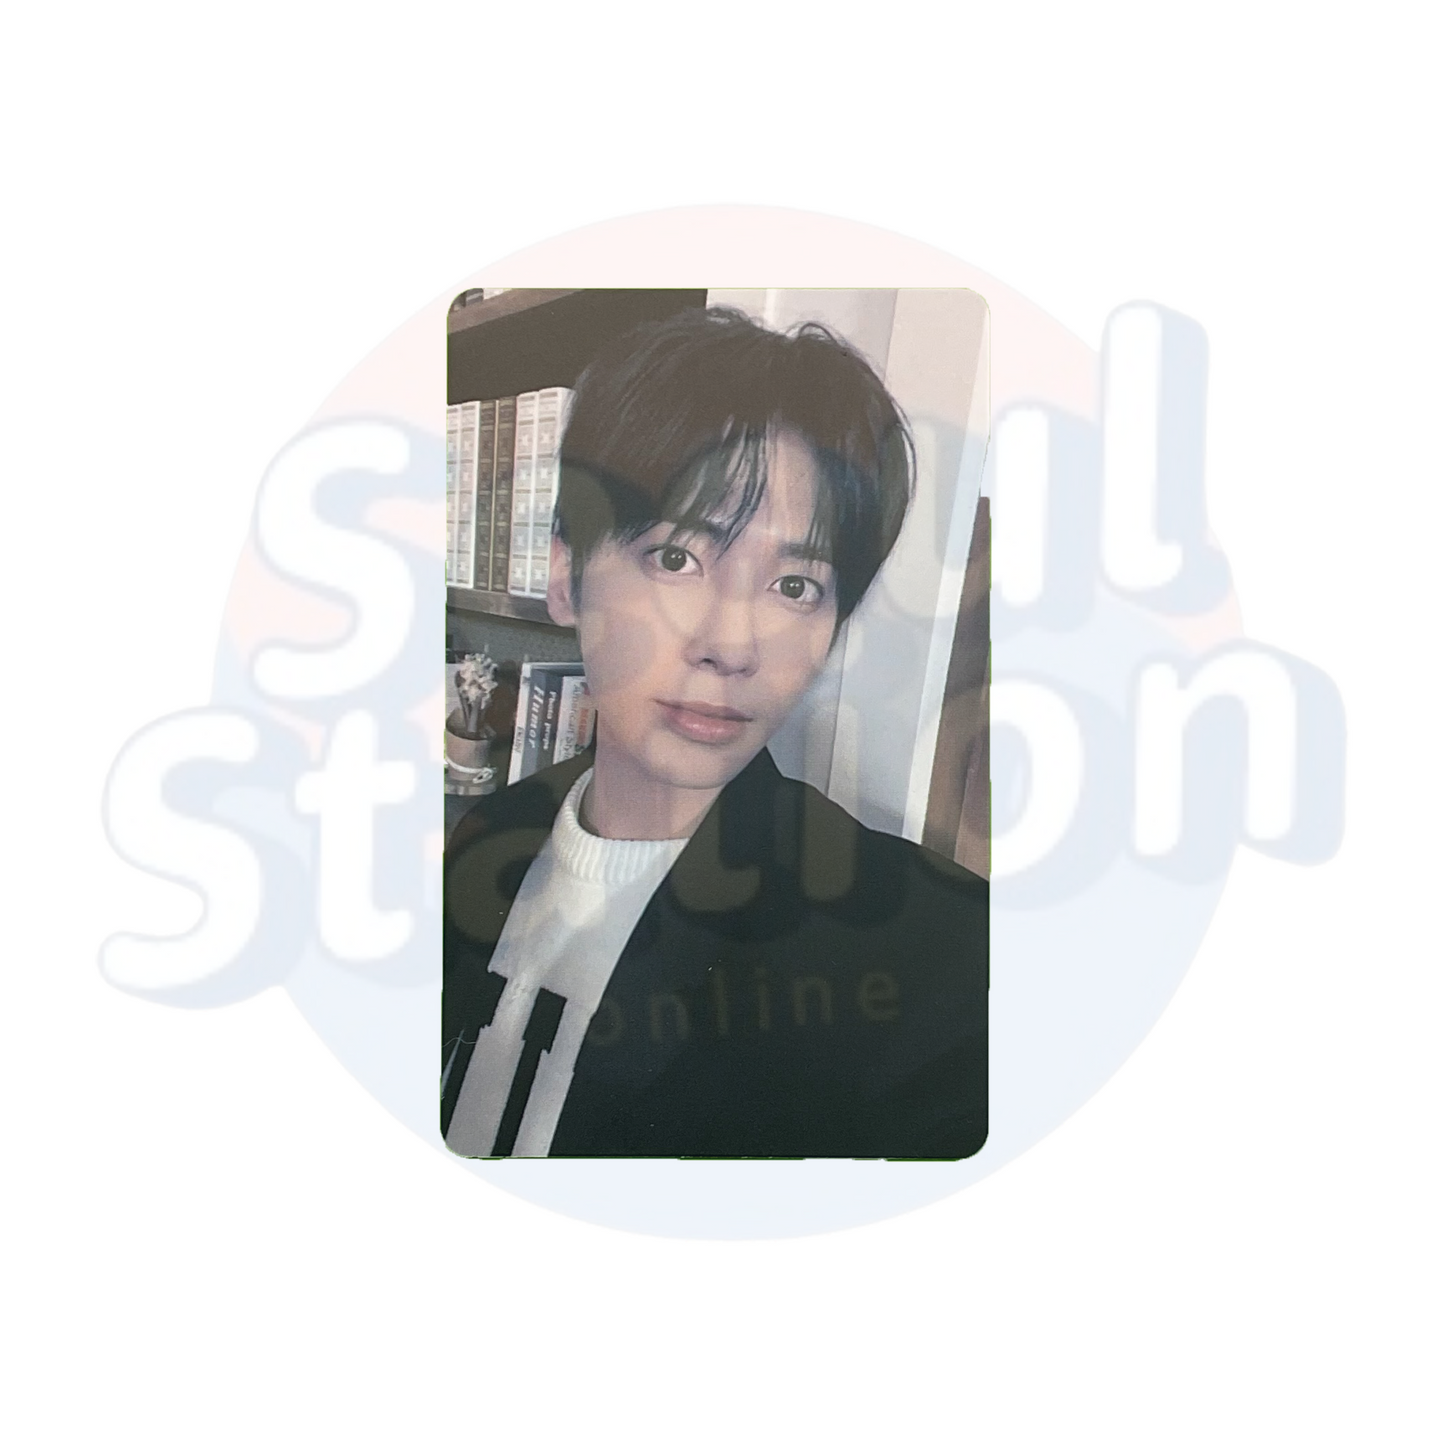 TXT - Minisode 2: Thursday's Child - 2nd Round Powerstation Photo Card (Black Back) Taehyun